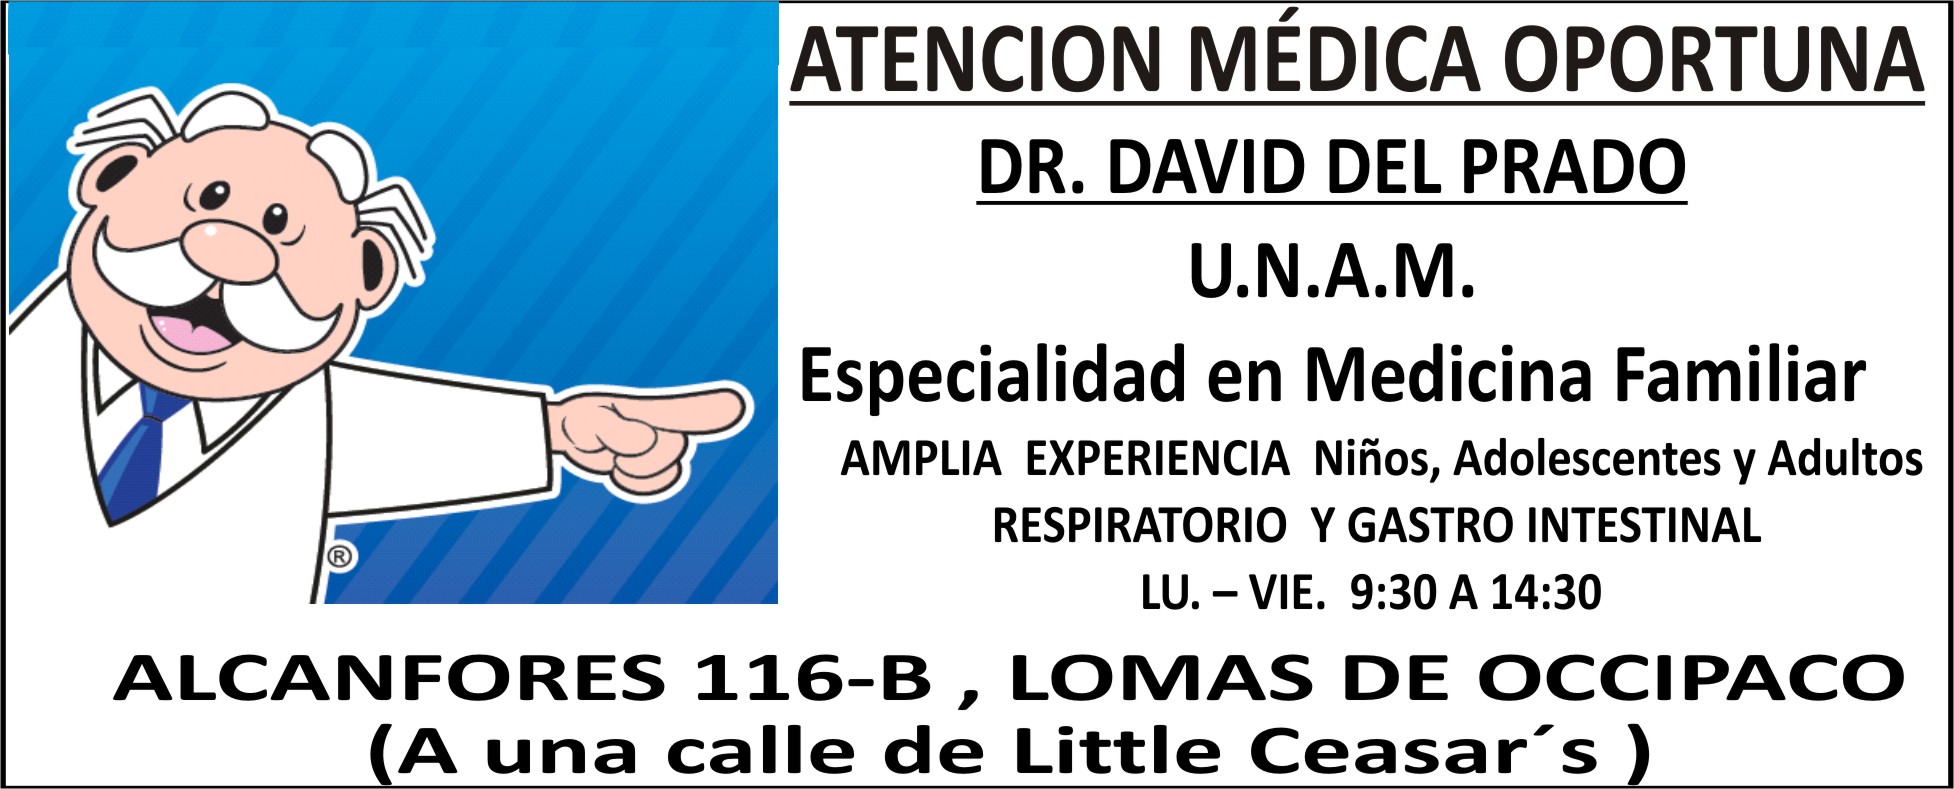 ATENCION M&EACUTE;DICA OPORTUNA

DR.